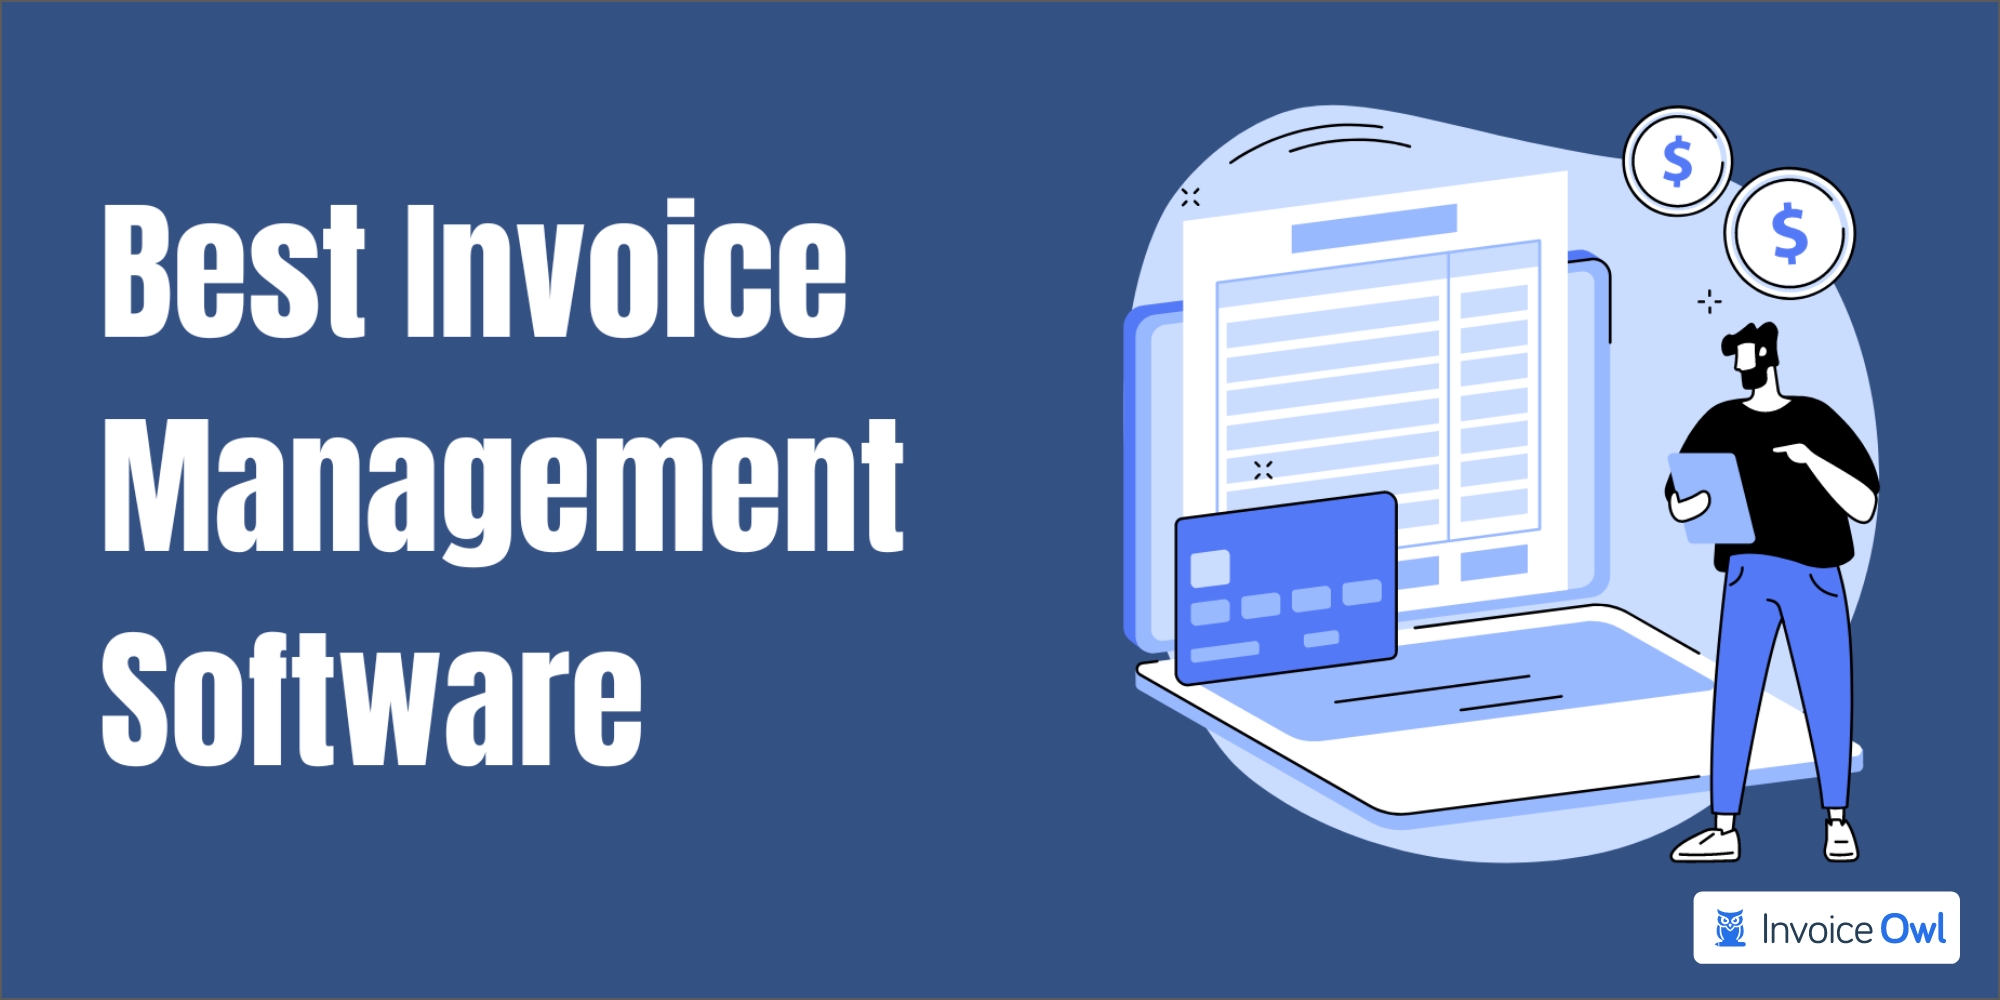 Best invoice management software